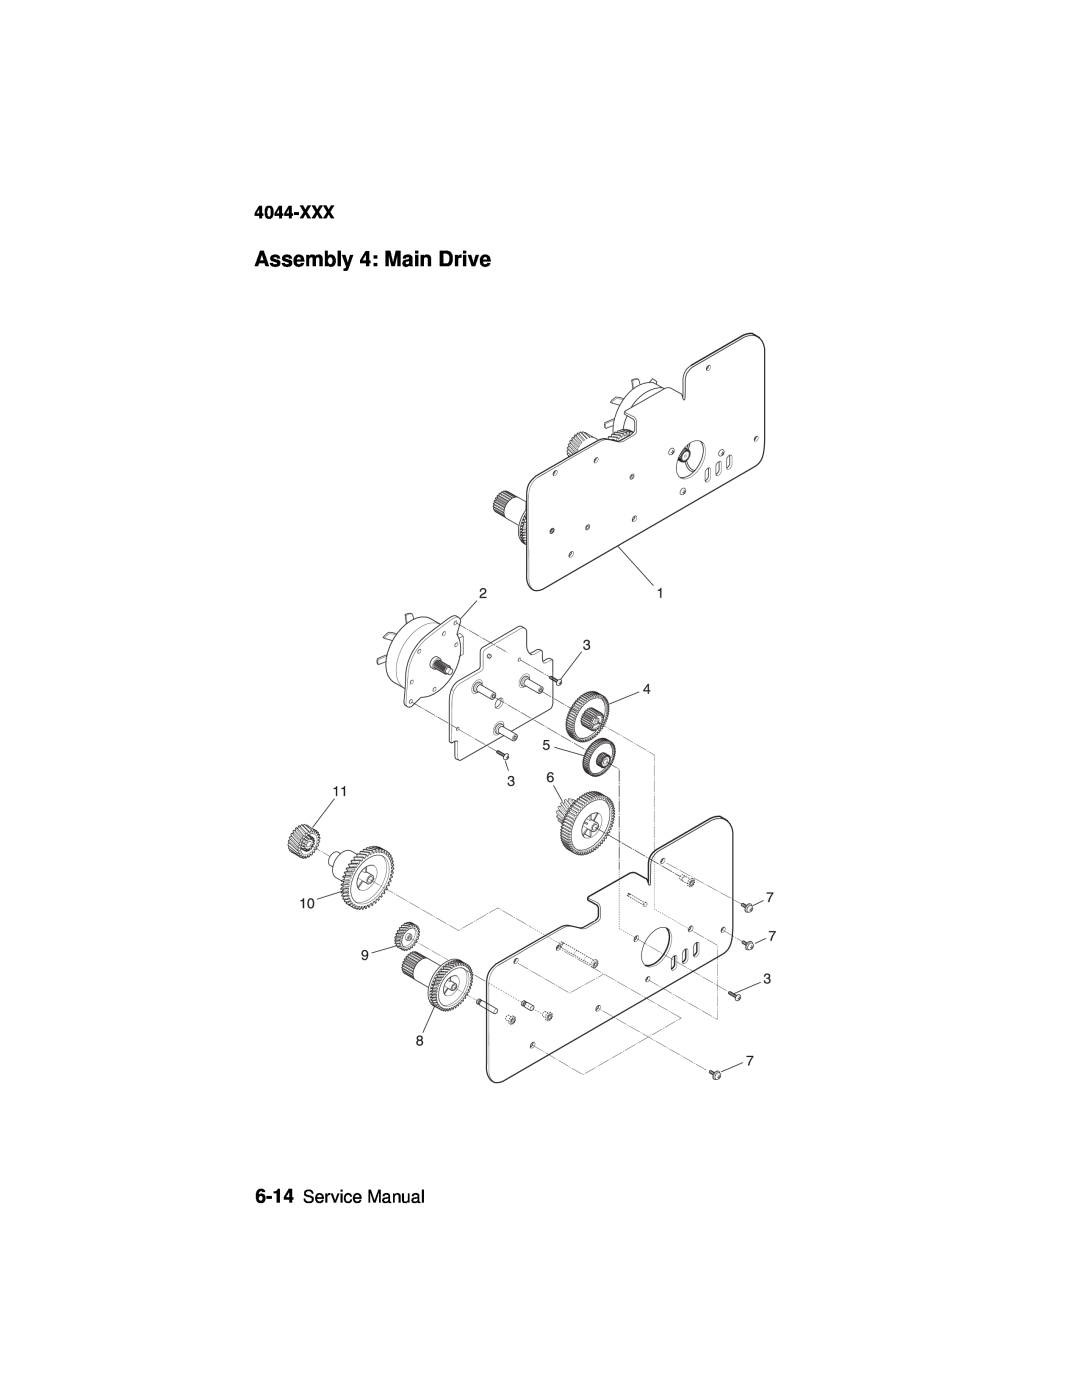 Lexmark 4044-XXX, E310 manual Assembly 4: Main Drive, Service Manual 